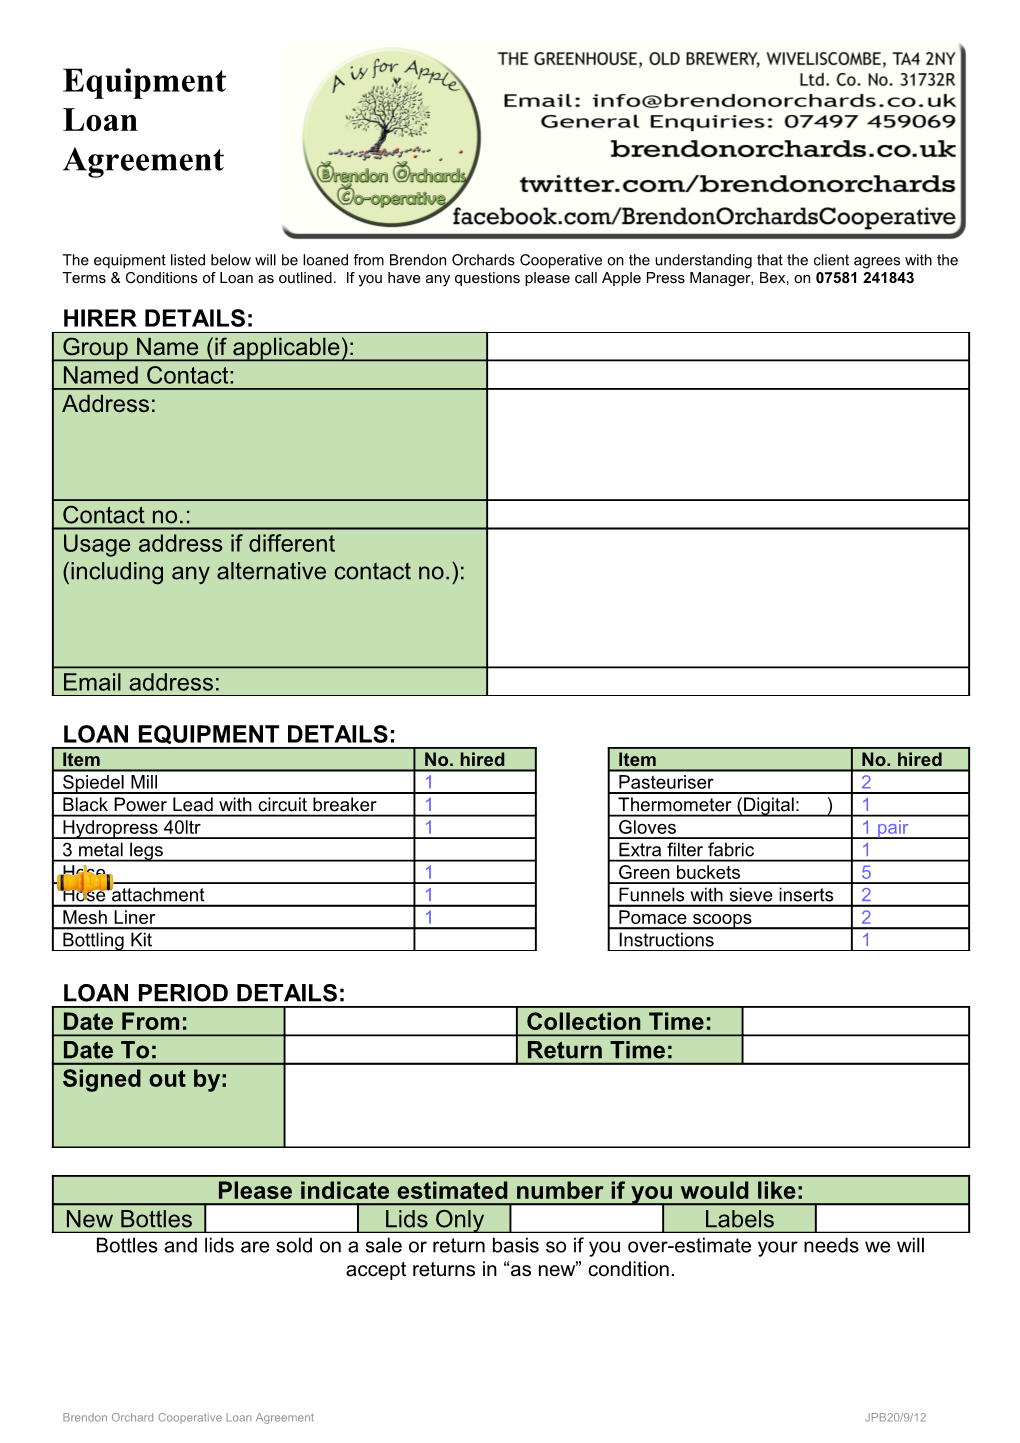 Loan Equipment Details